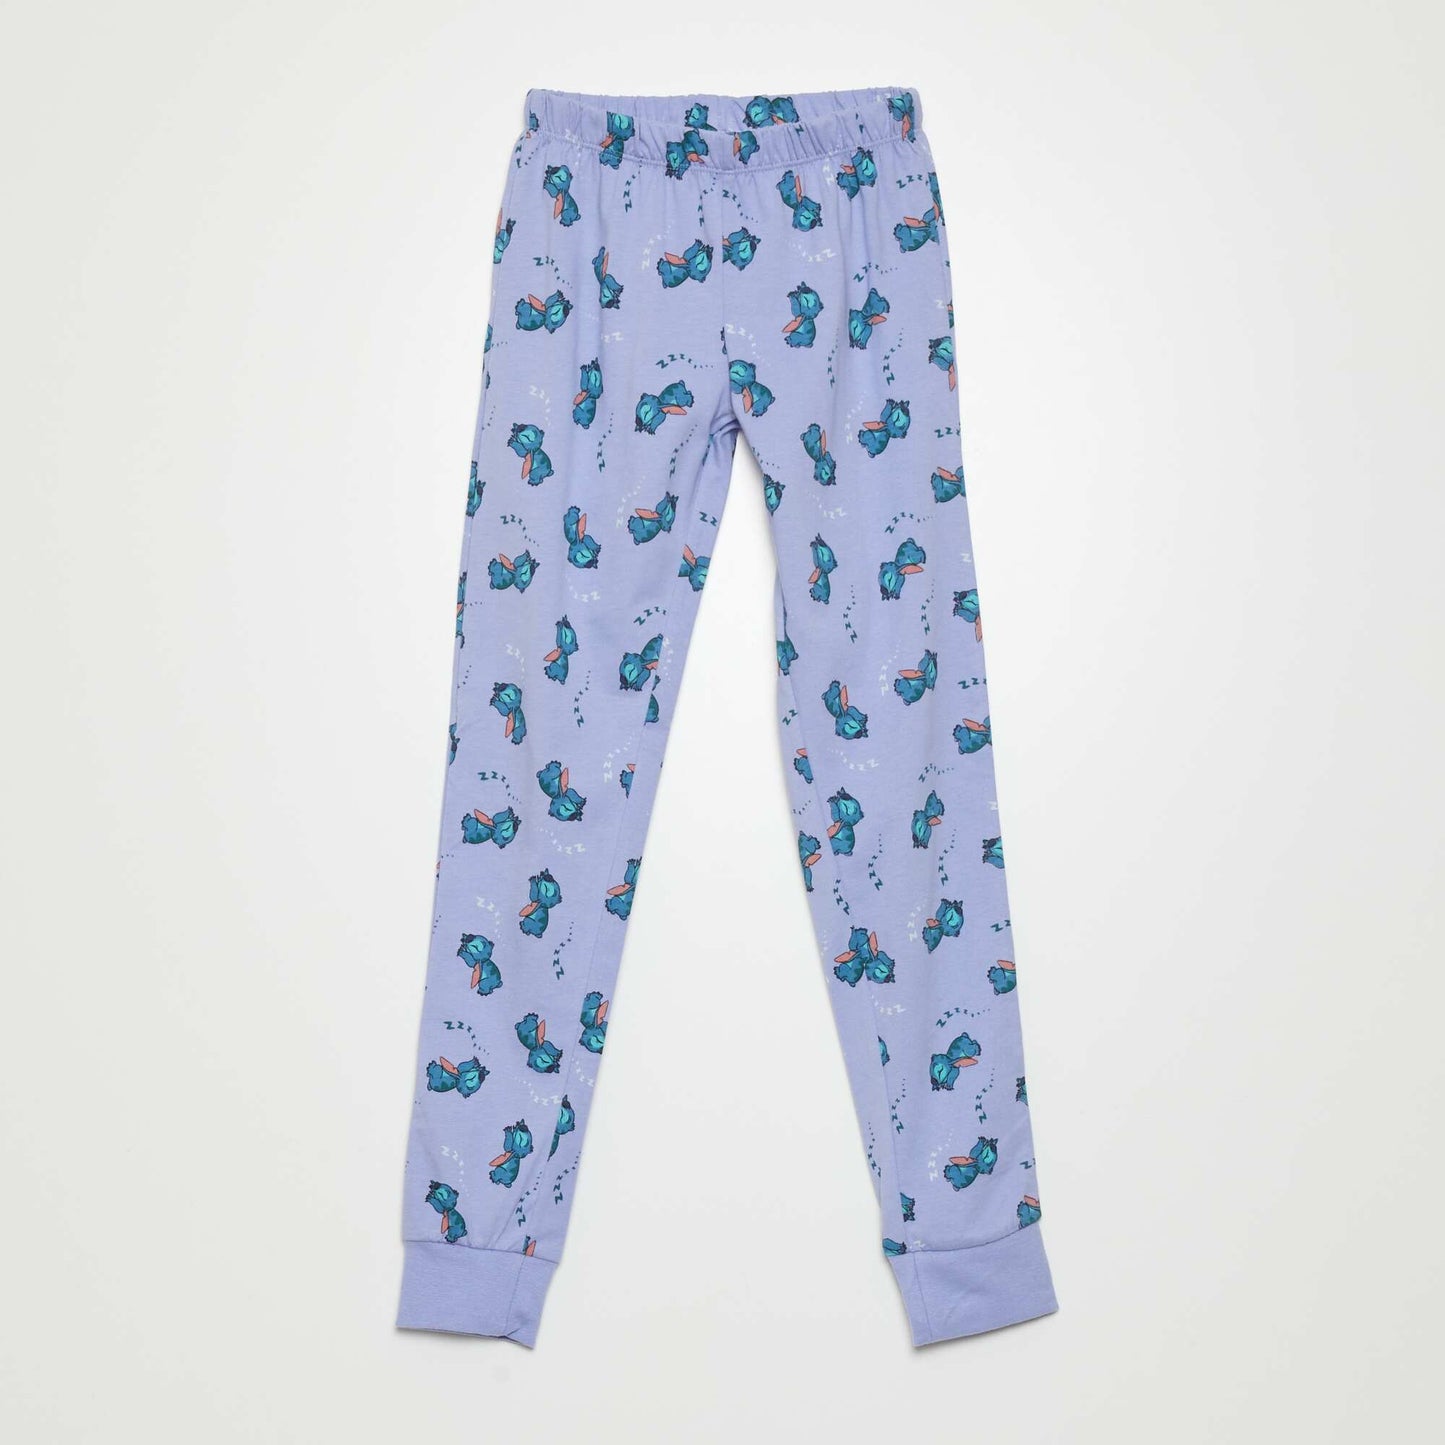 Pyjama long 'Disney' en jersey - 2 pi ces Bleu